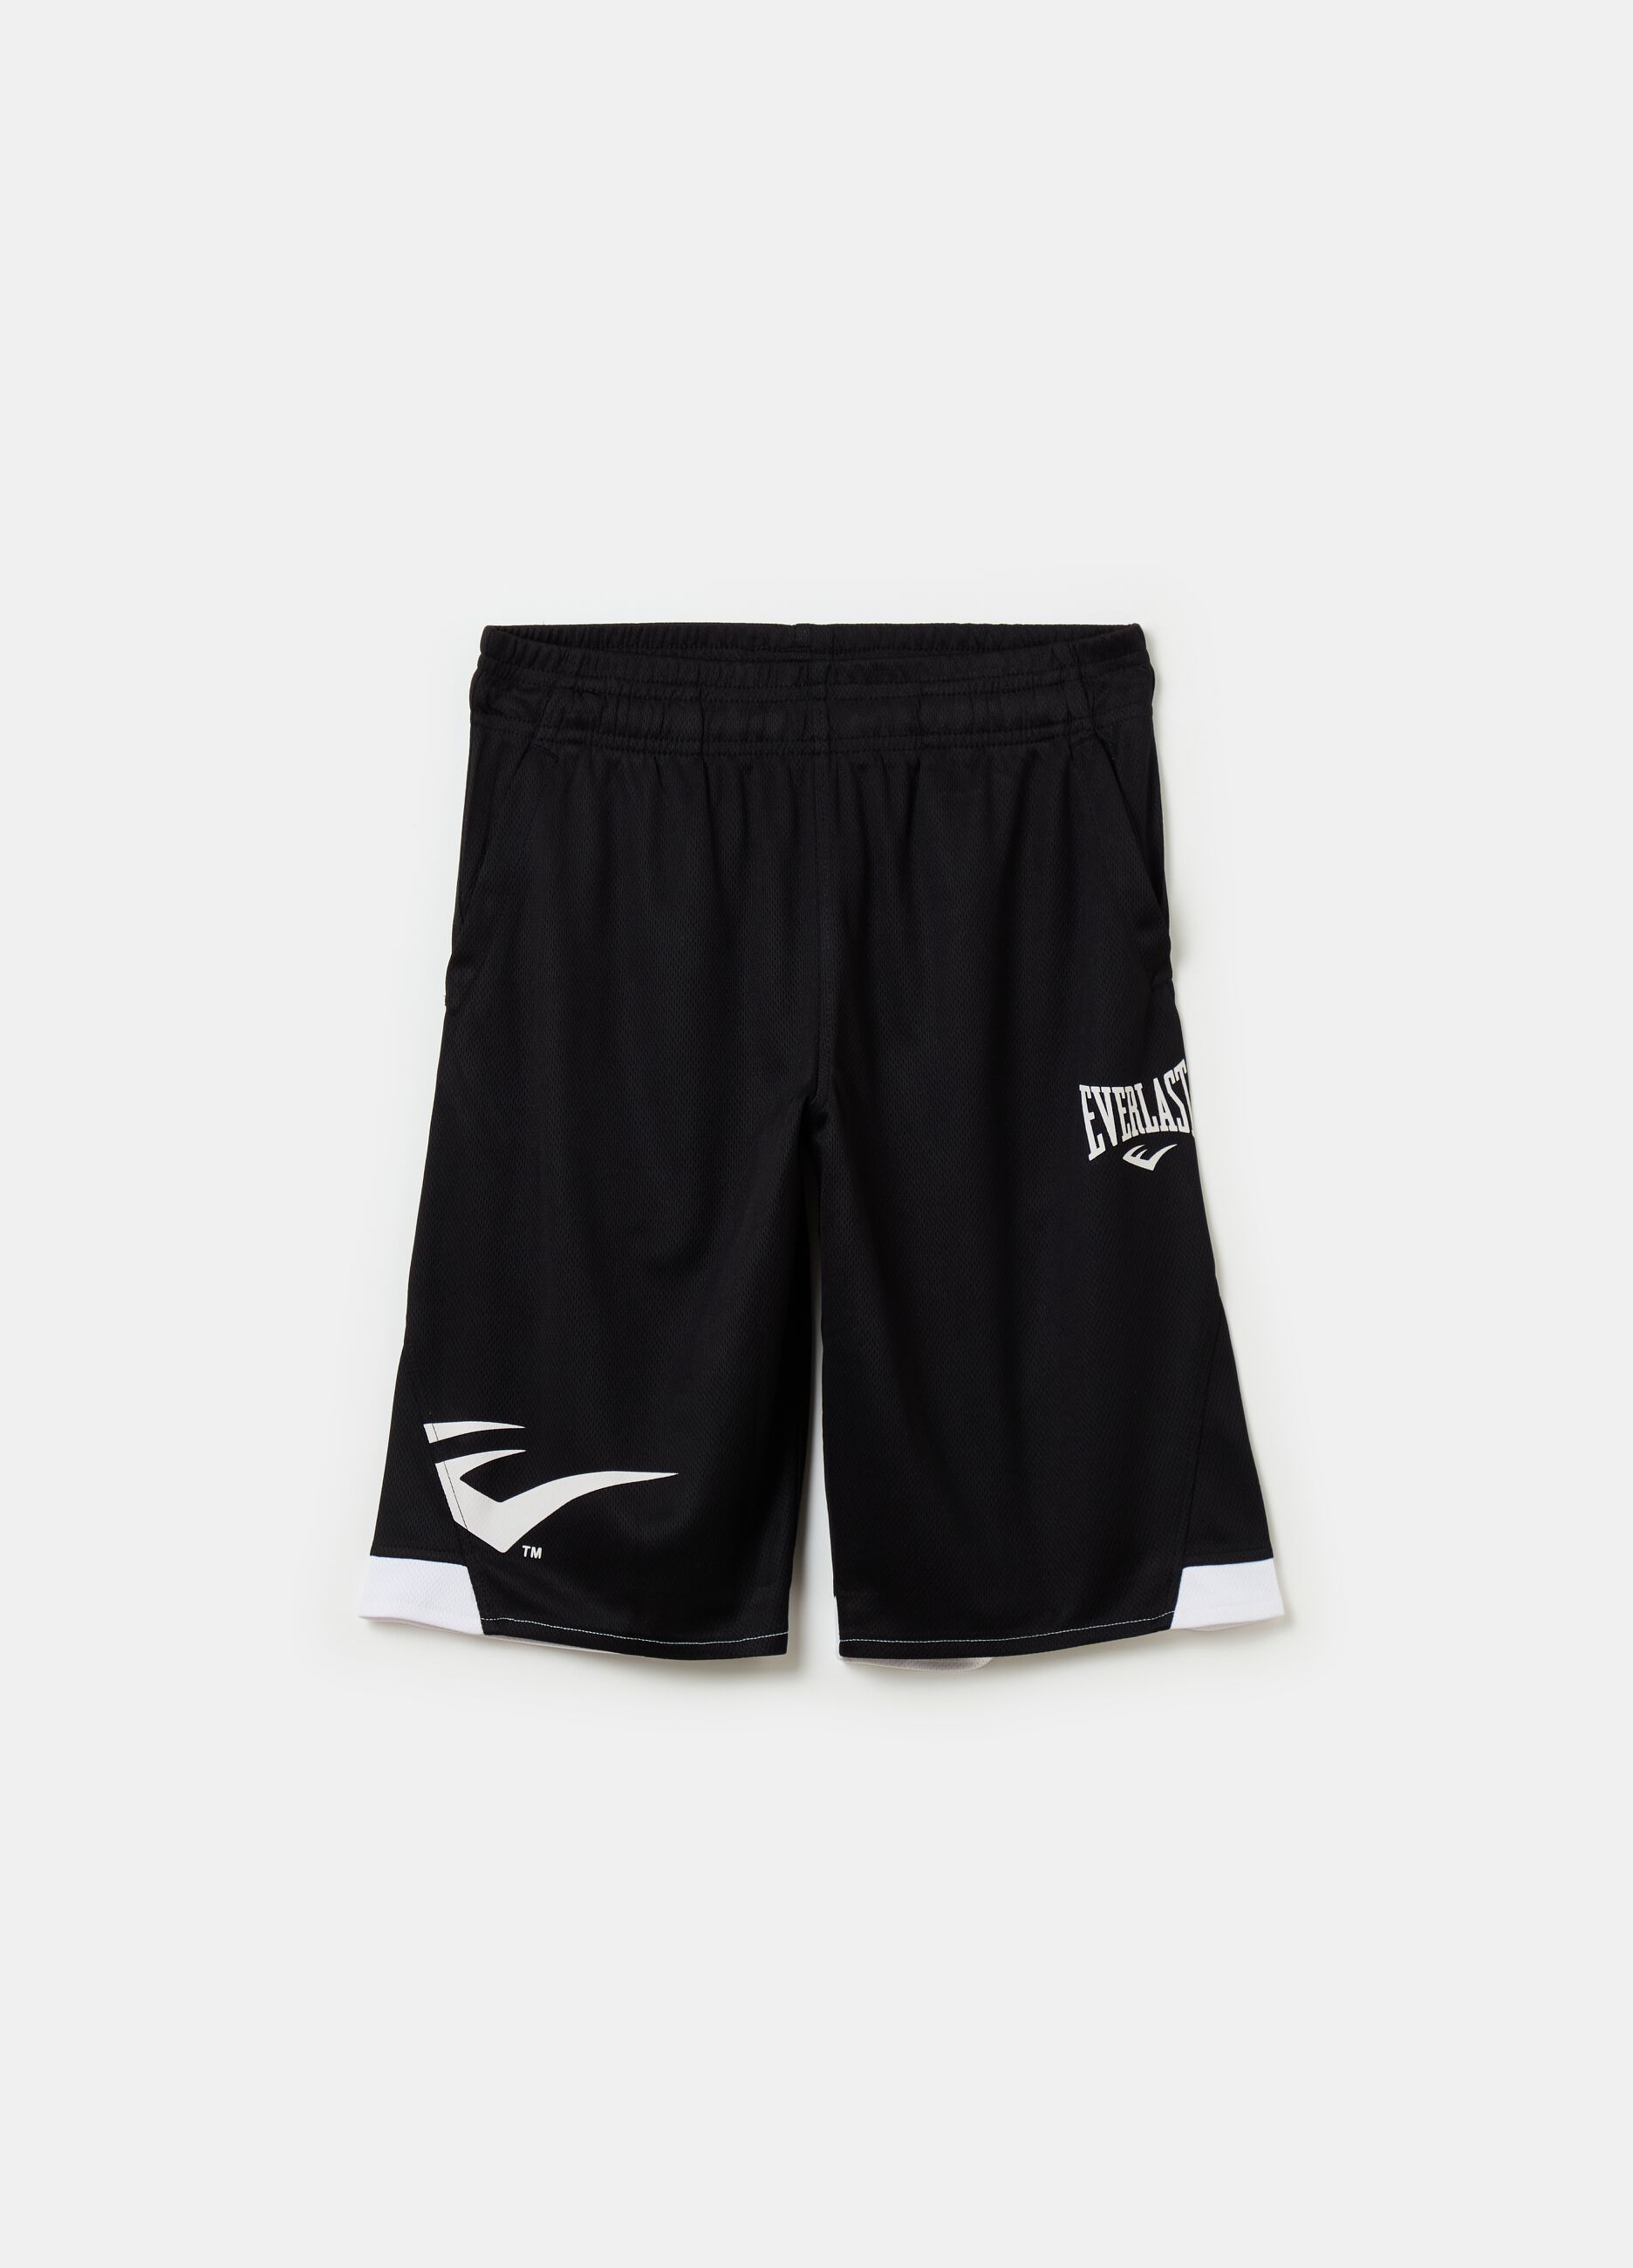 Mesh Bermuda shorts with logo print